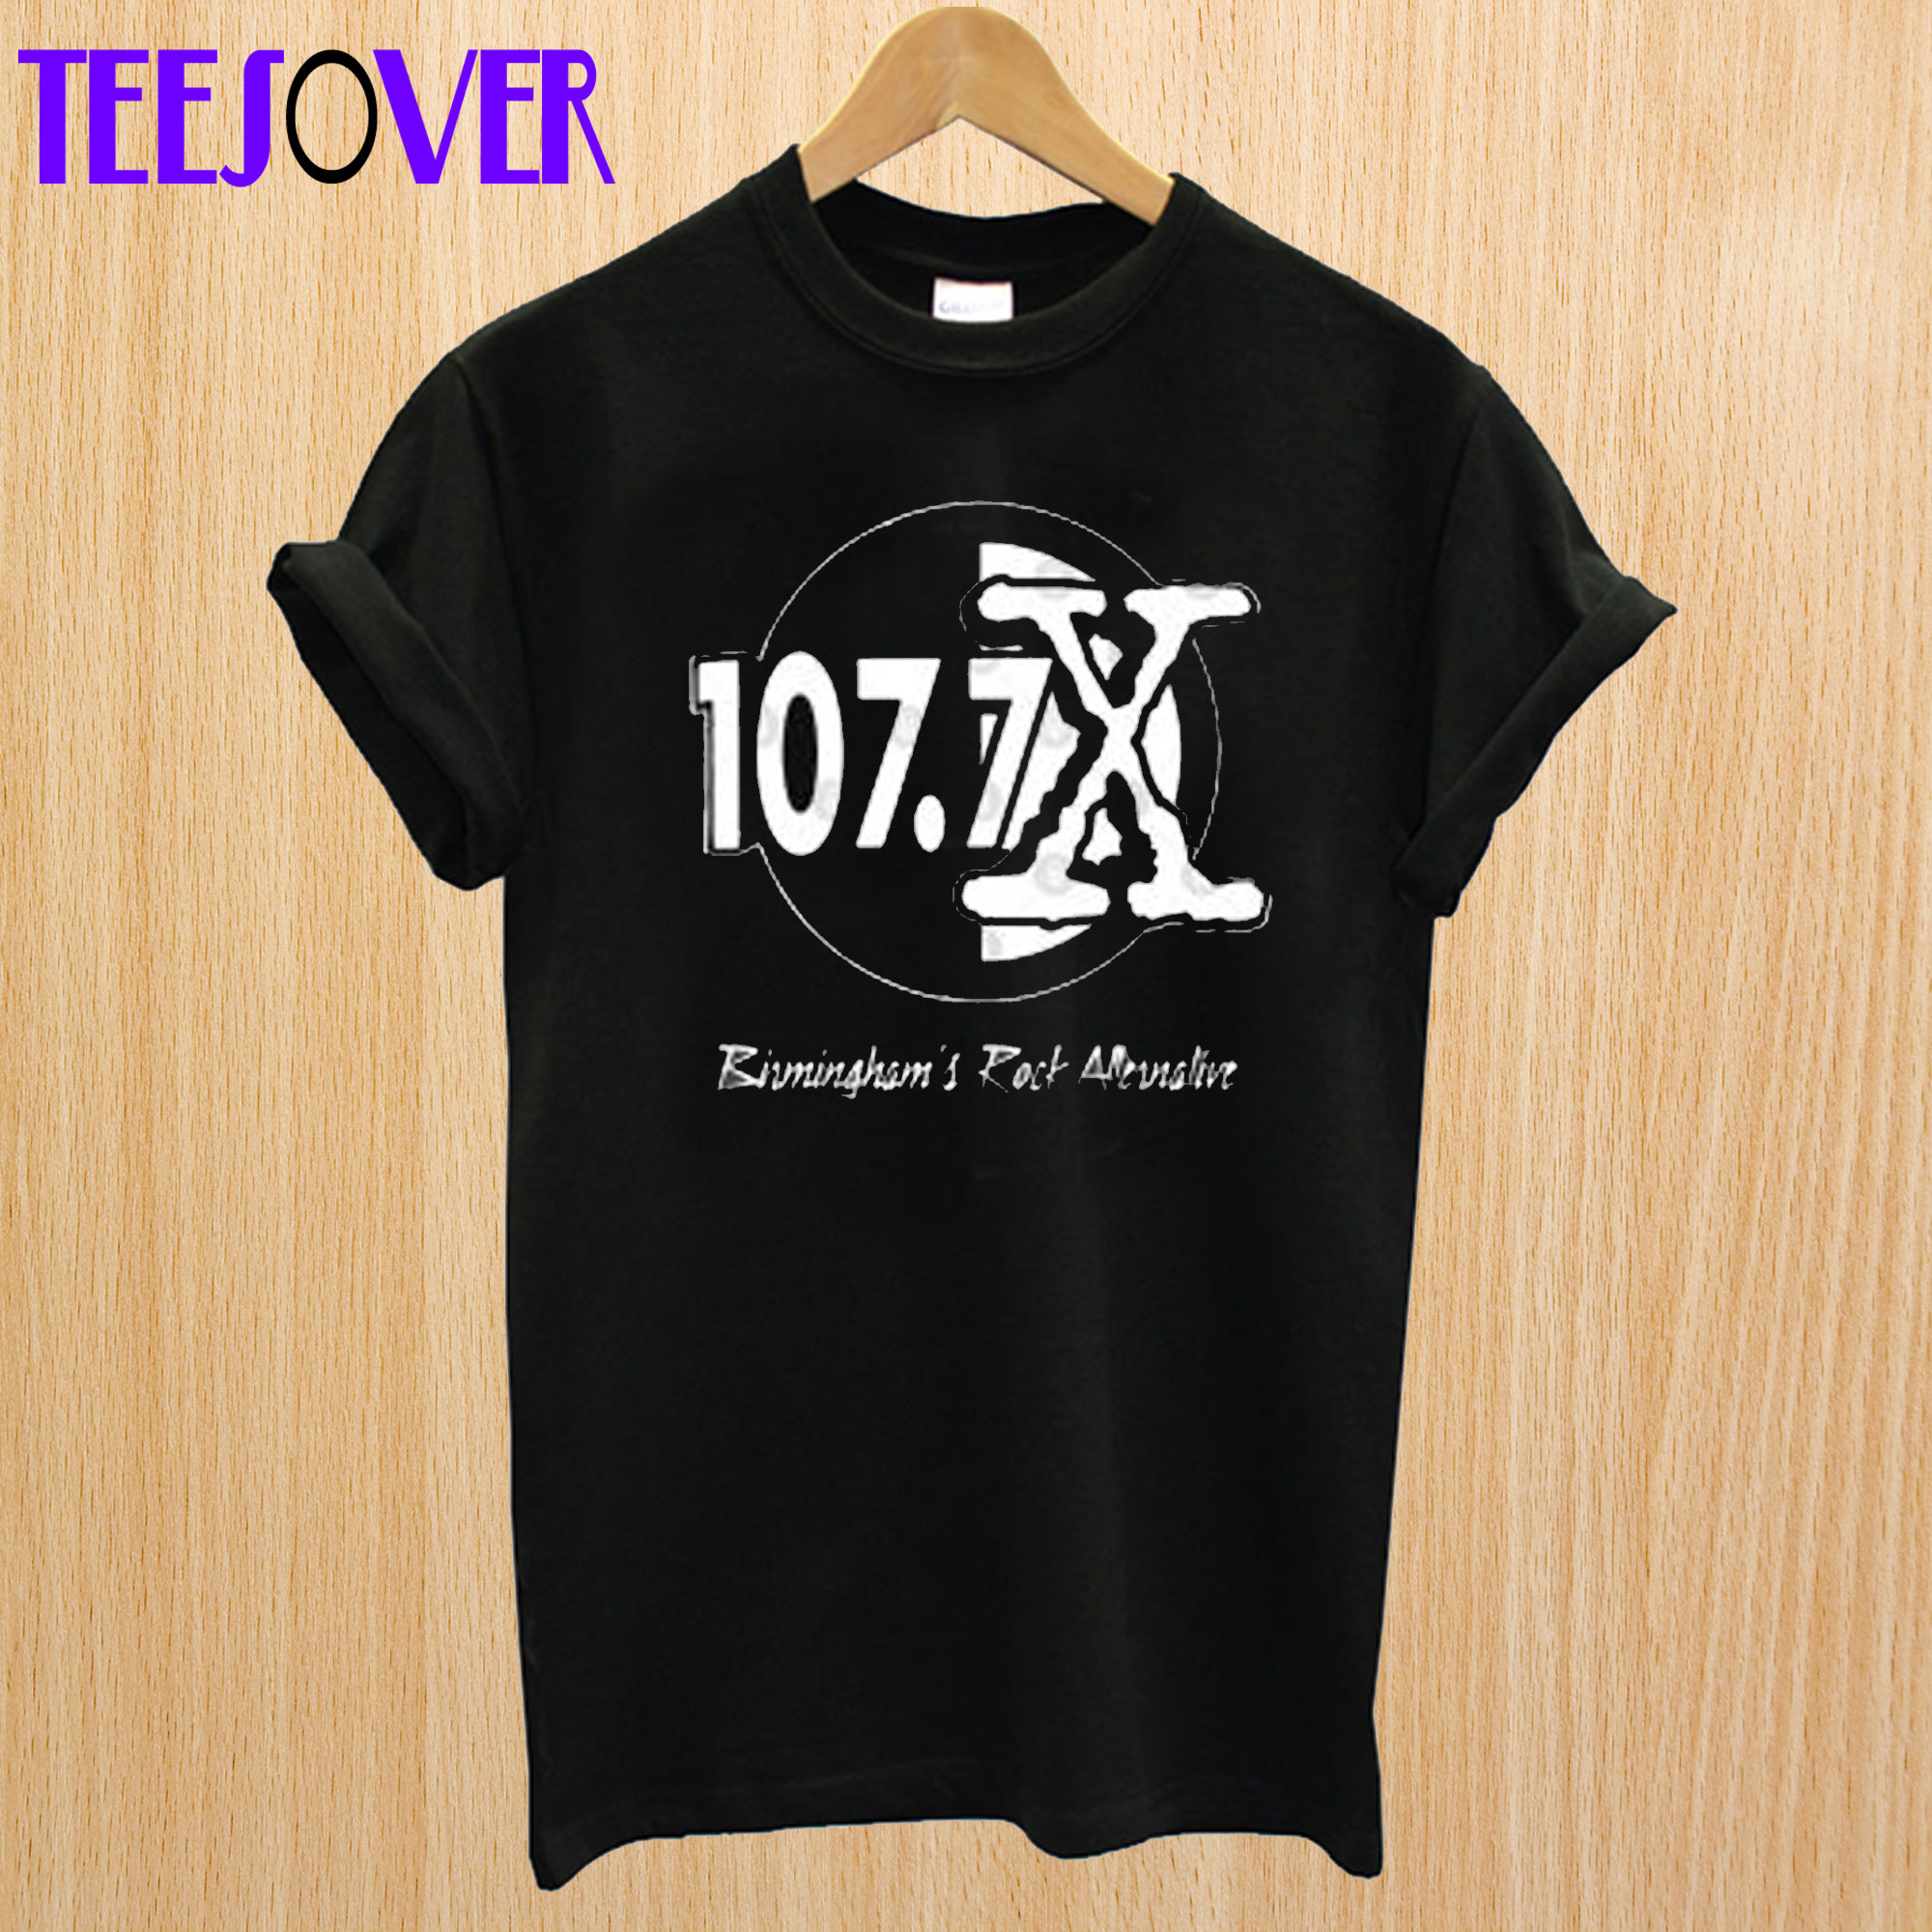 107.7 THE X ROCK ALTERNATIV T-Shirt